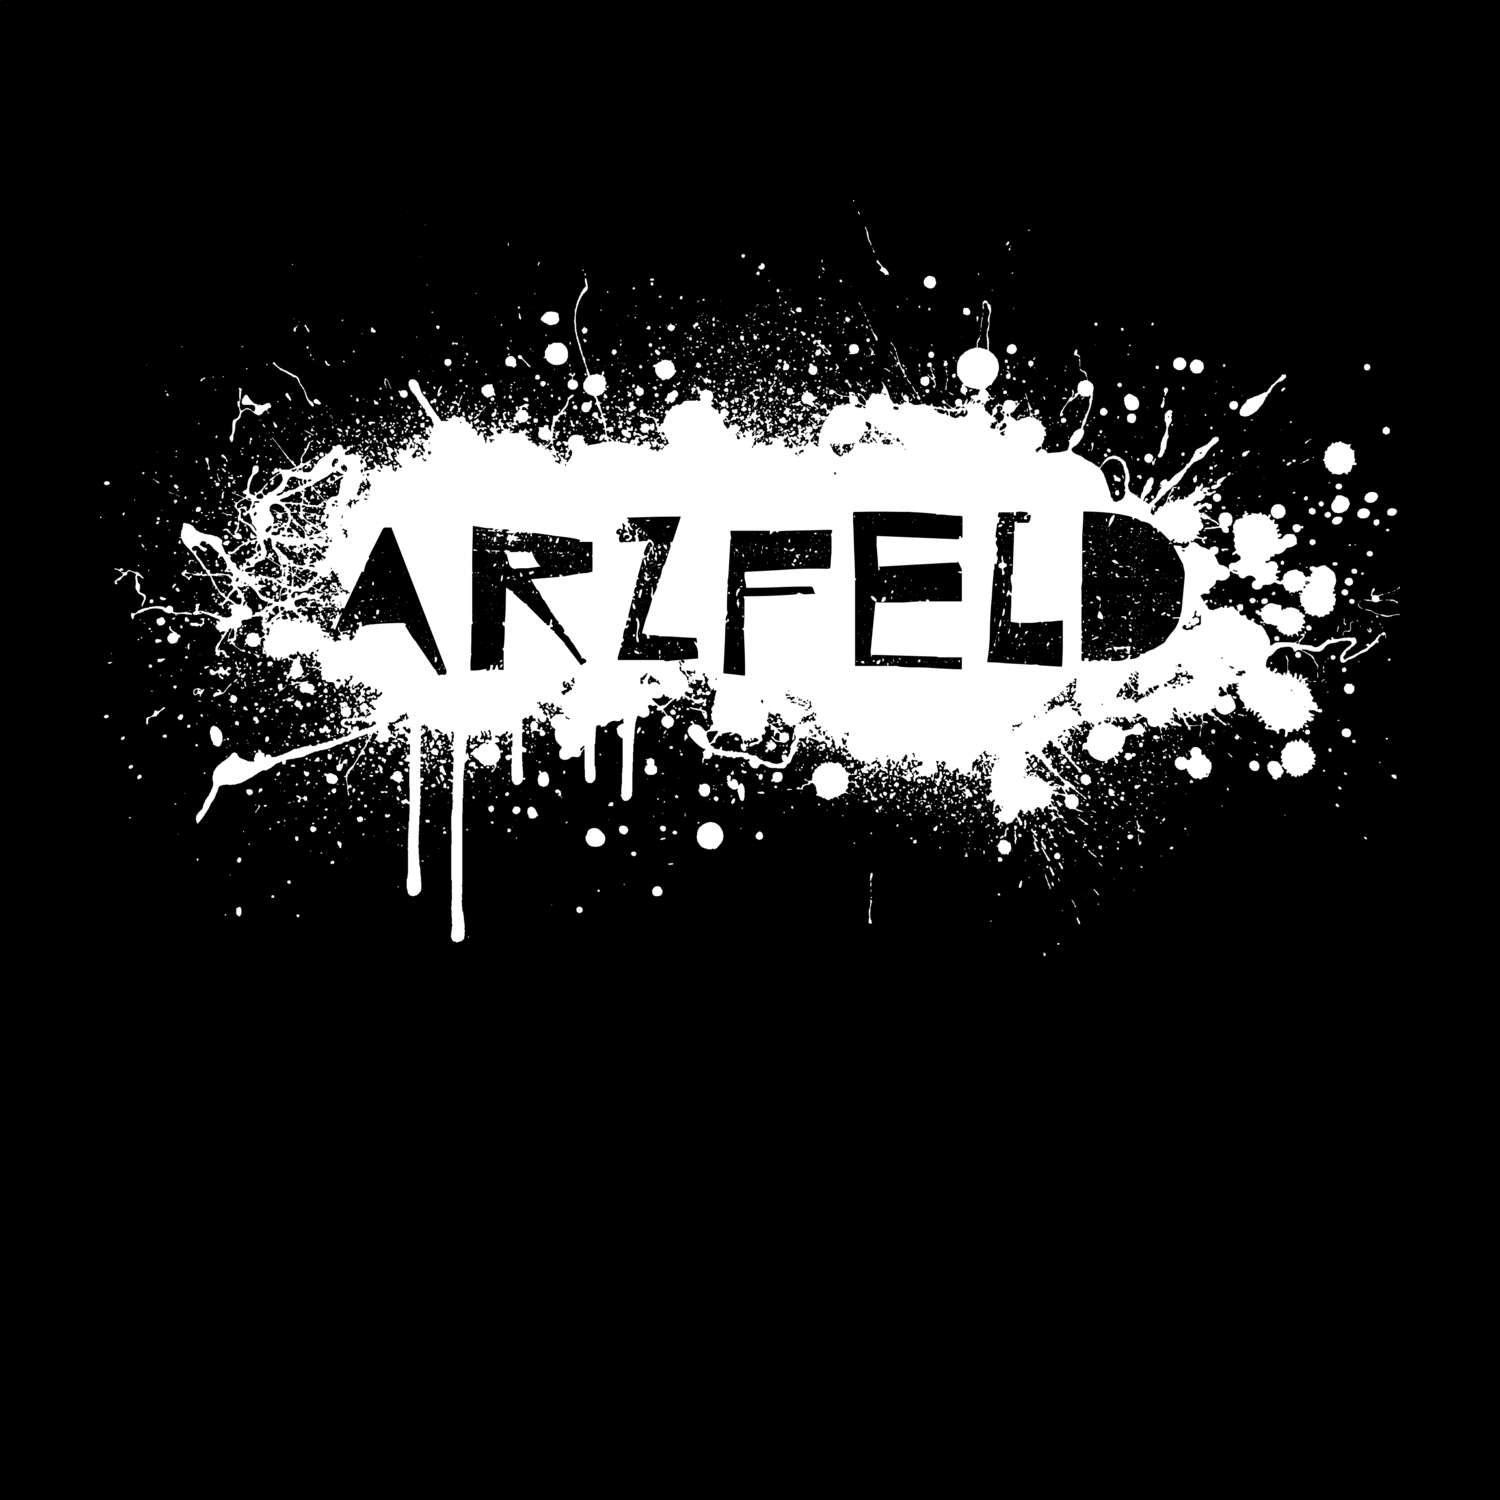 Arzfeld T-Shirt »Paint Splash Punk«